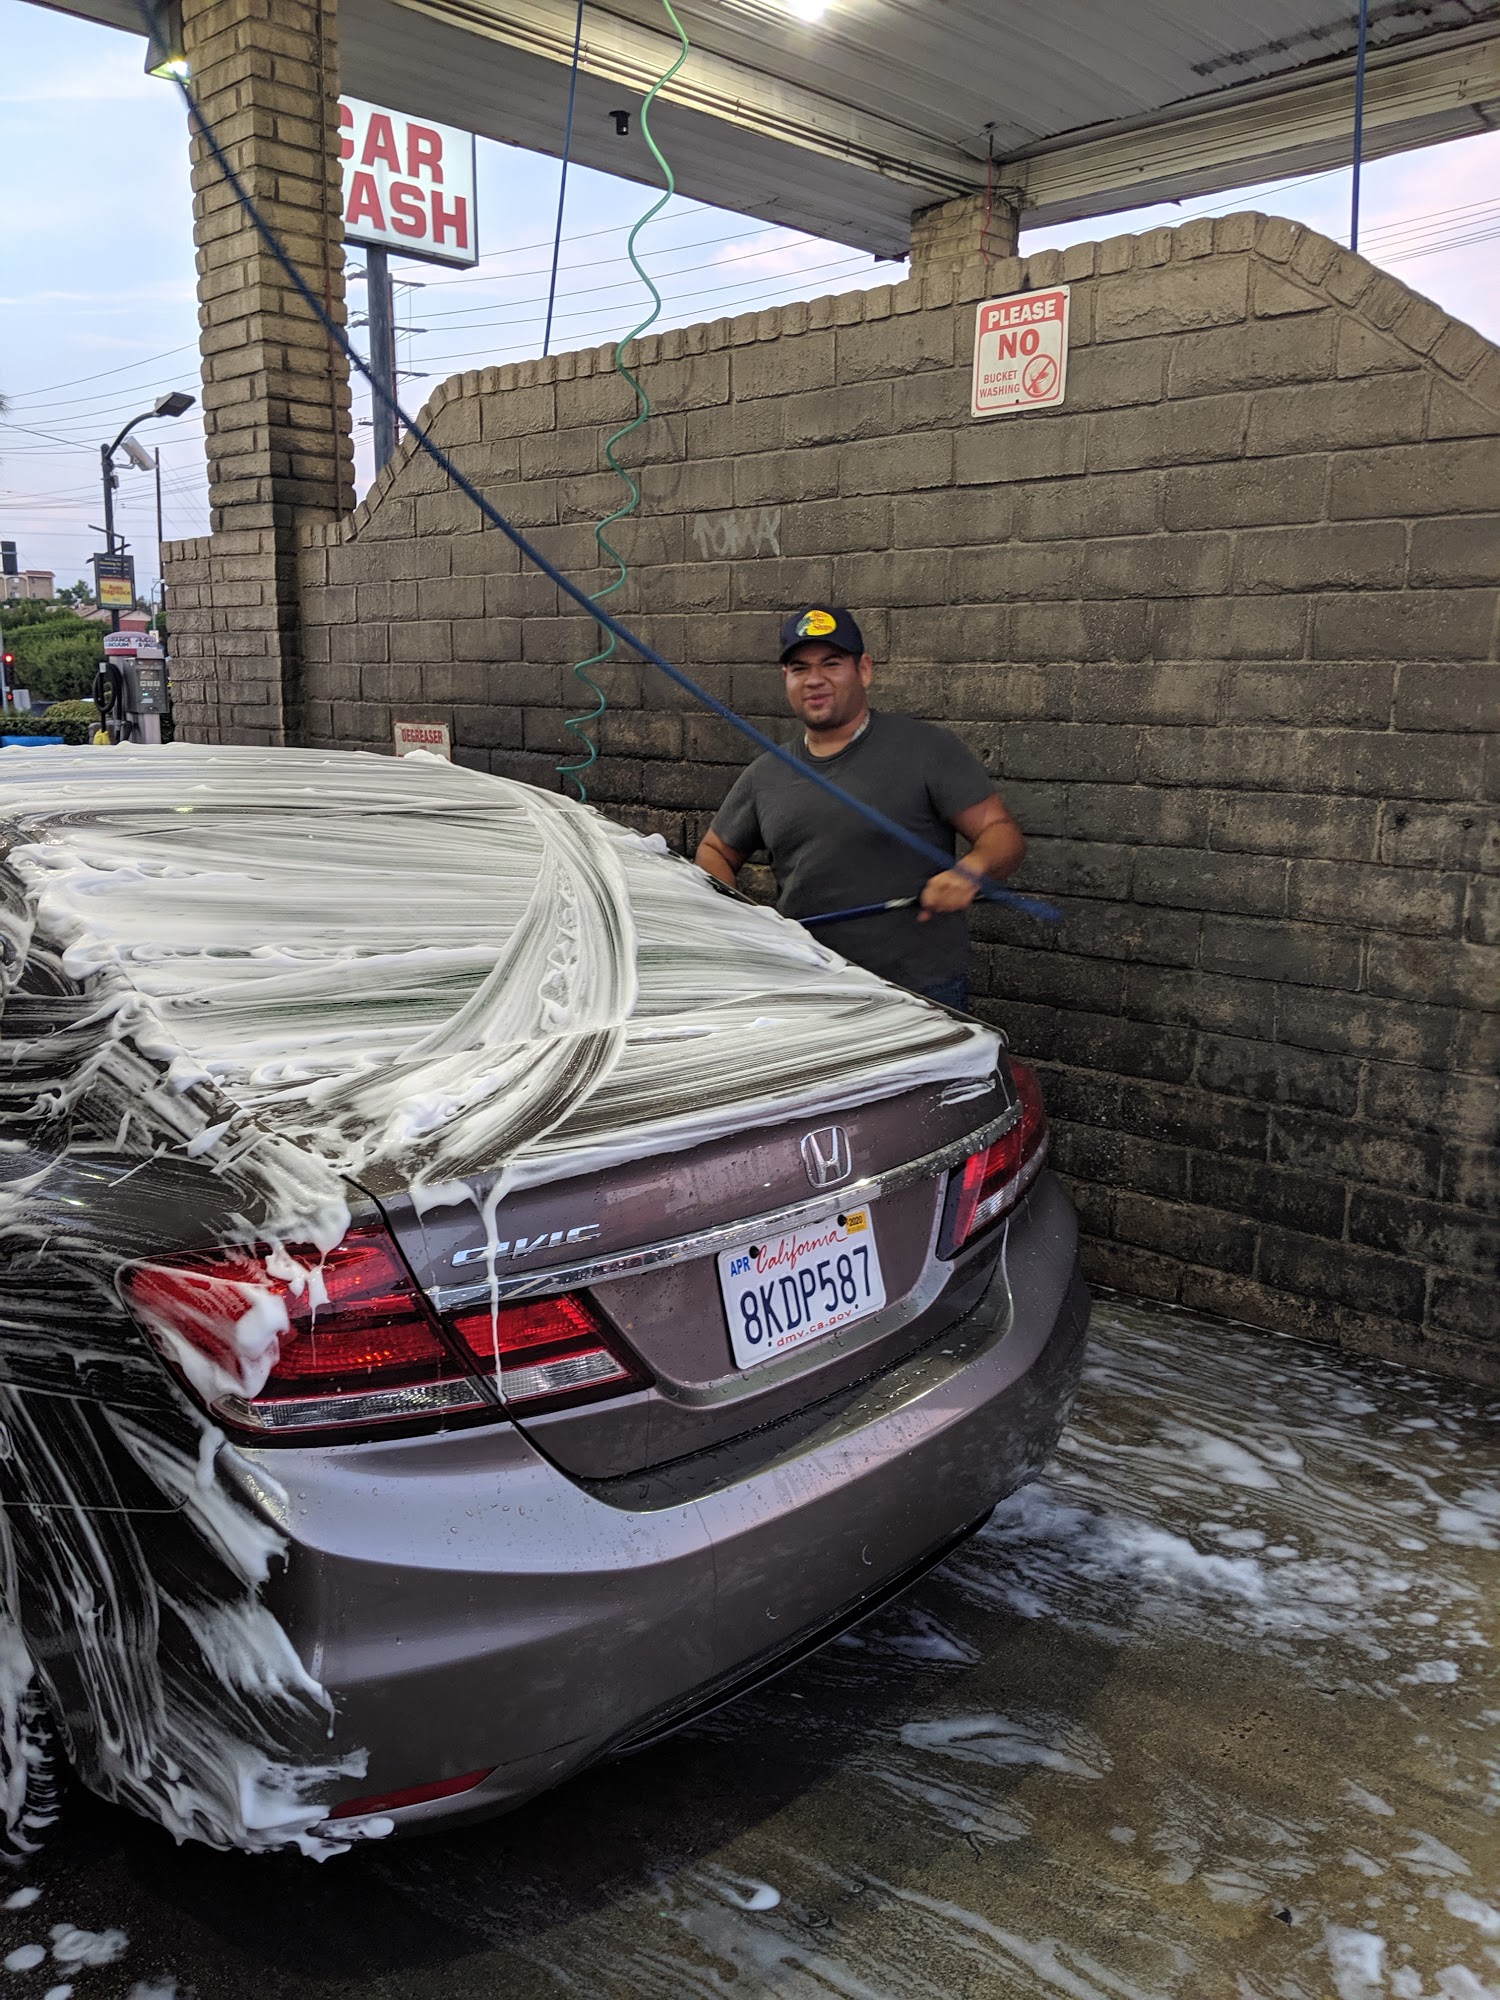 Buena Vista Self-Serv Car Wash